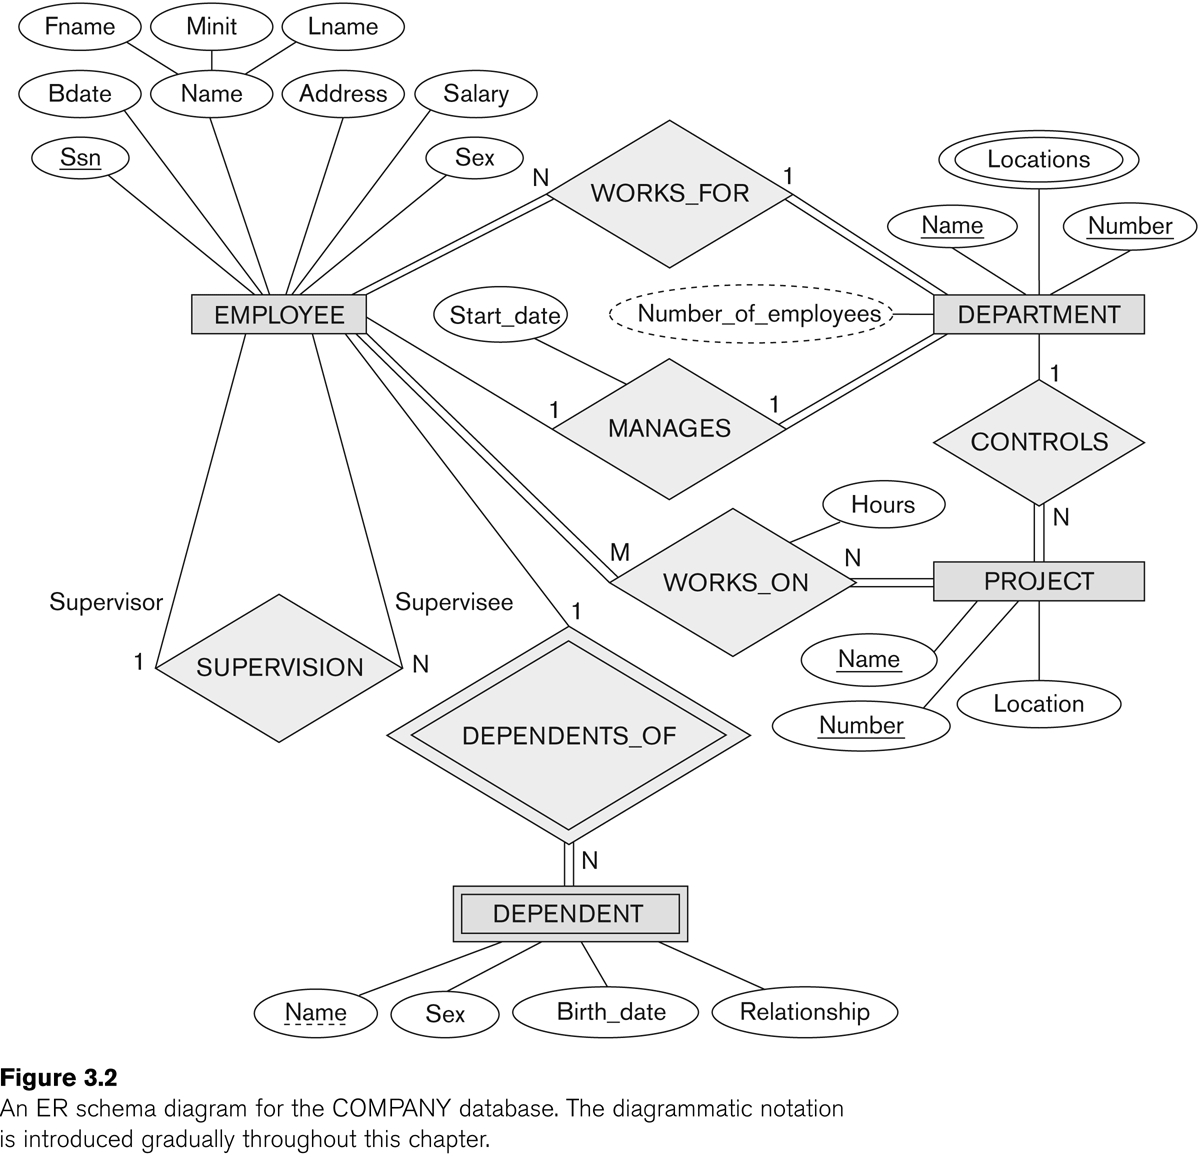 Entity-Relationship Modeling for Entity Relationship Model Tutorial